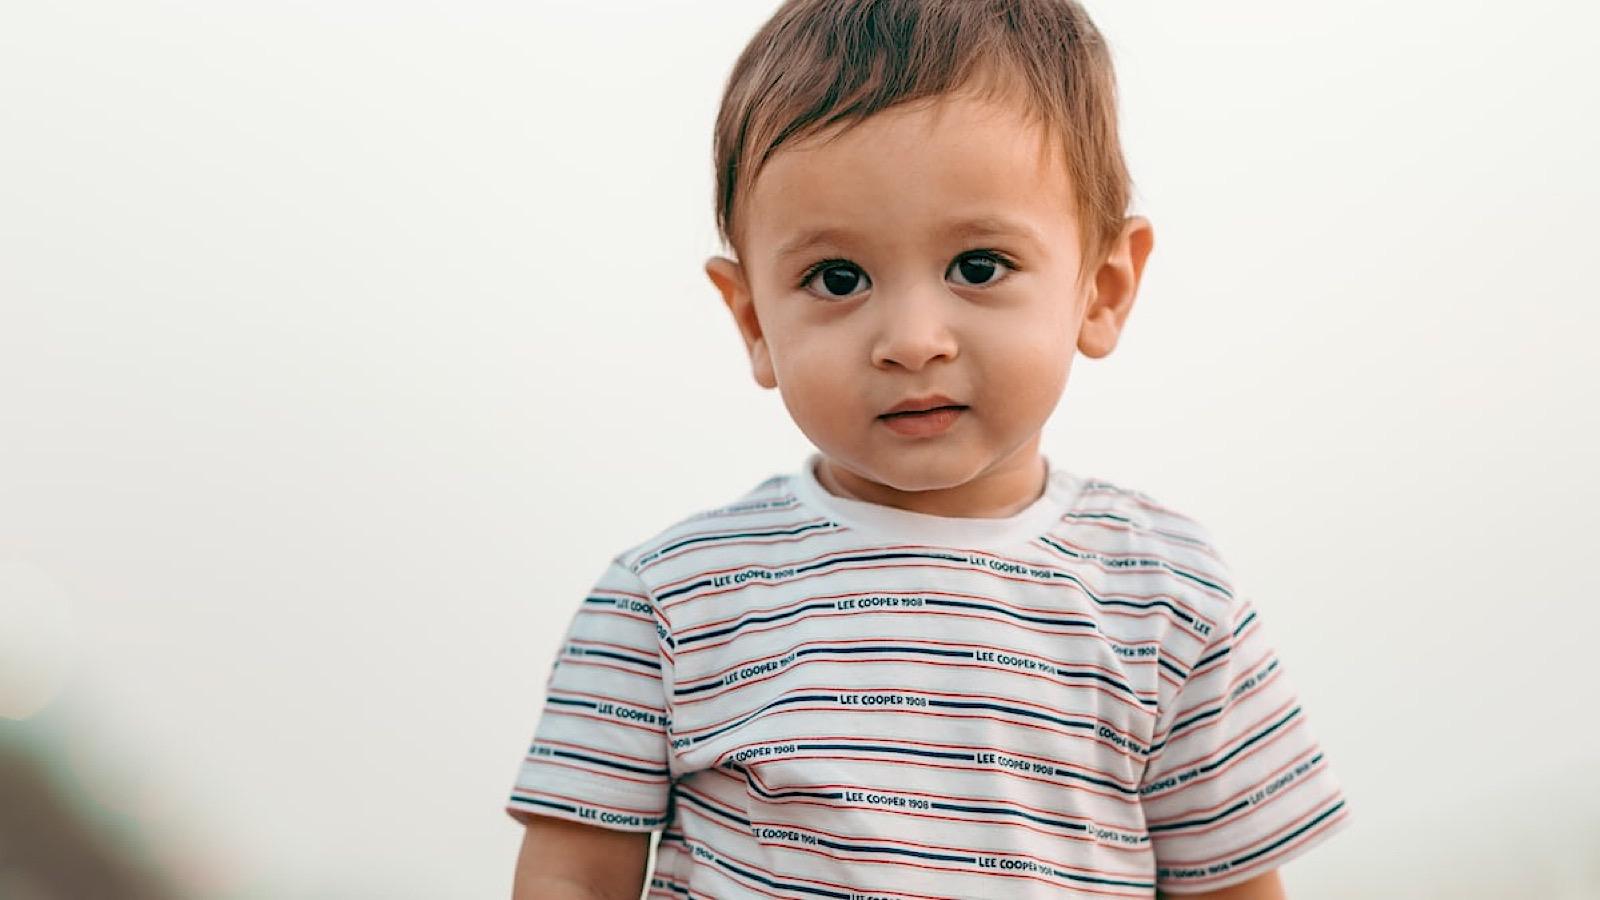 toddler spent $1,500 on Amazon via Alexa